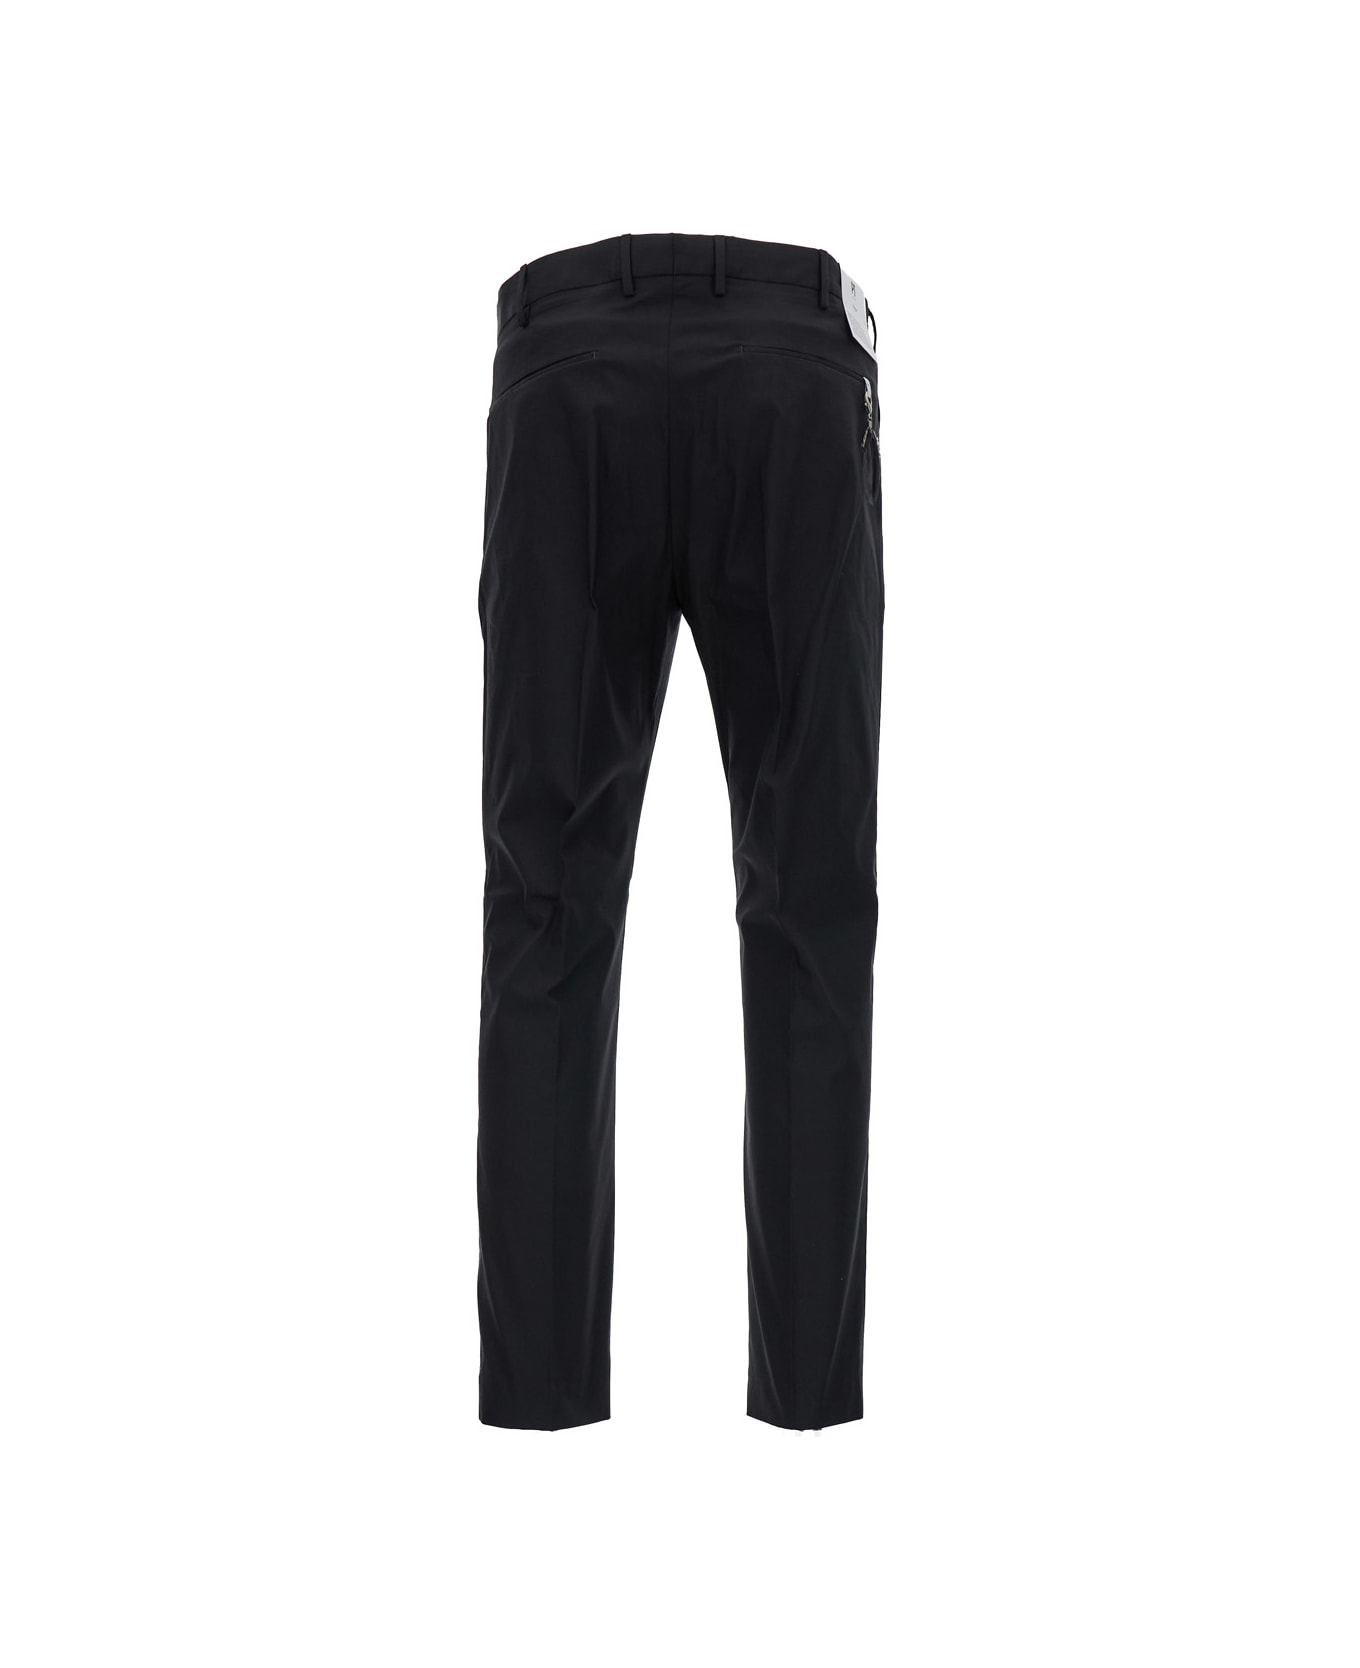 PT Torino Black Slim Cut Tailored Trousers In Cotton Blend Man - Black ボトムス